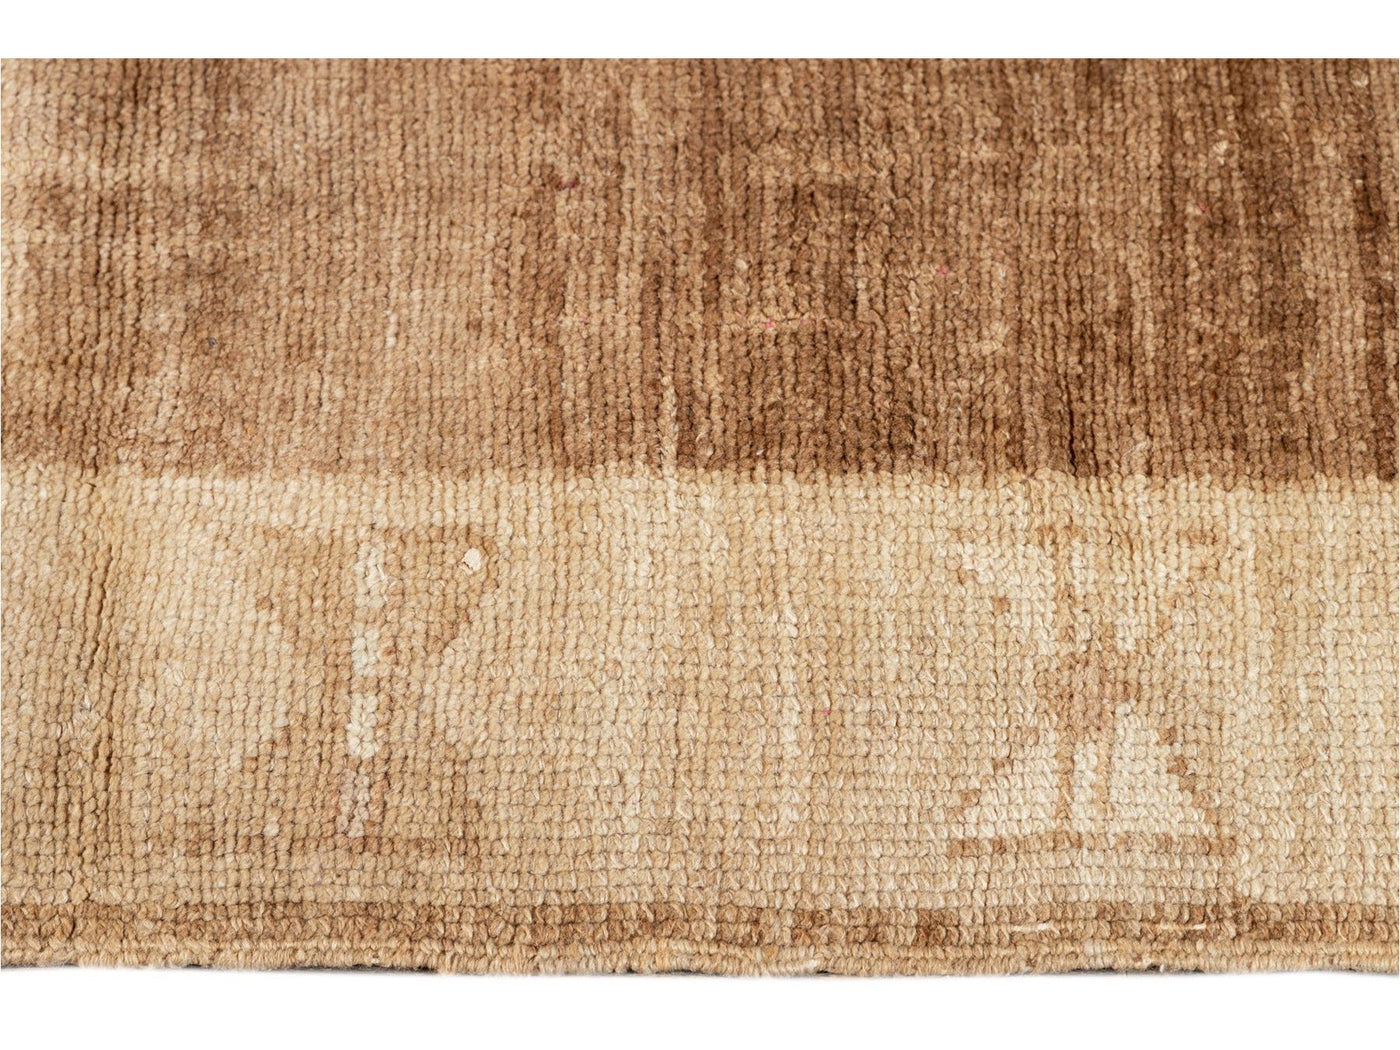 Early 20th Century Antique Anatolian Kars Wool Rug, 6' x 17'